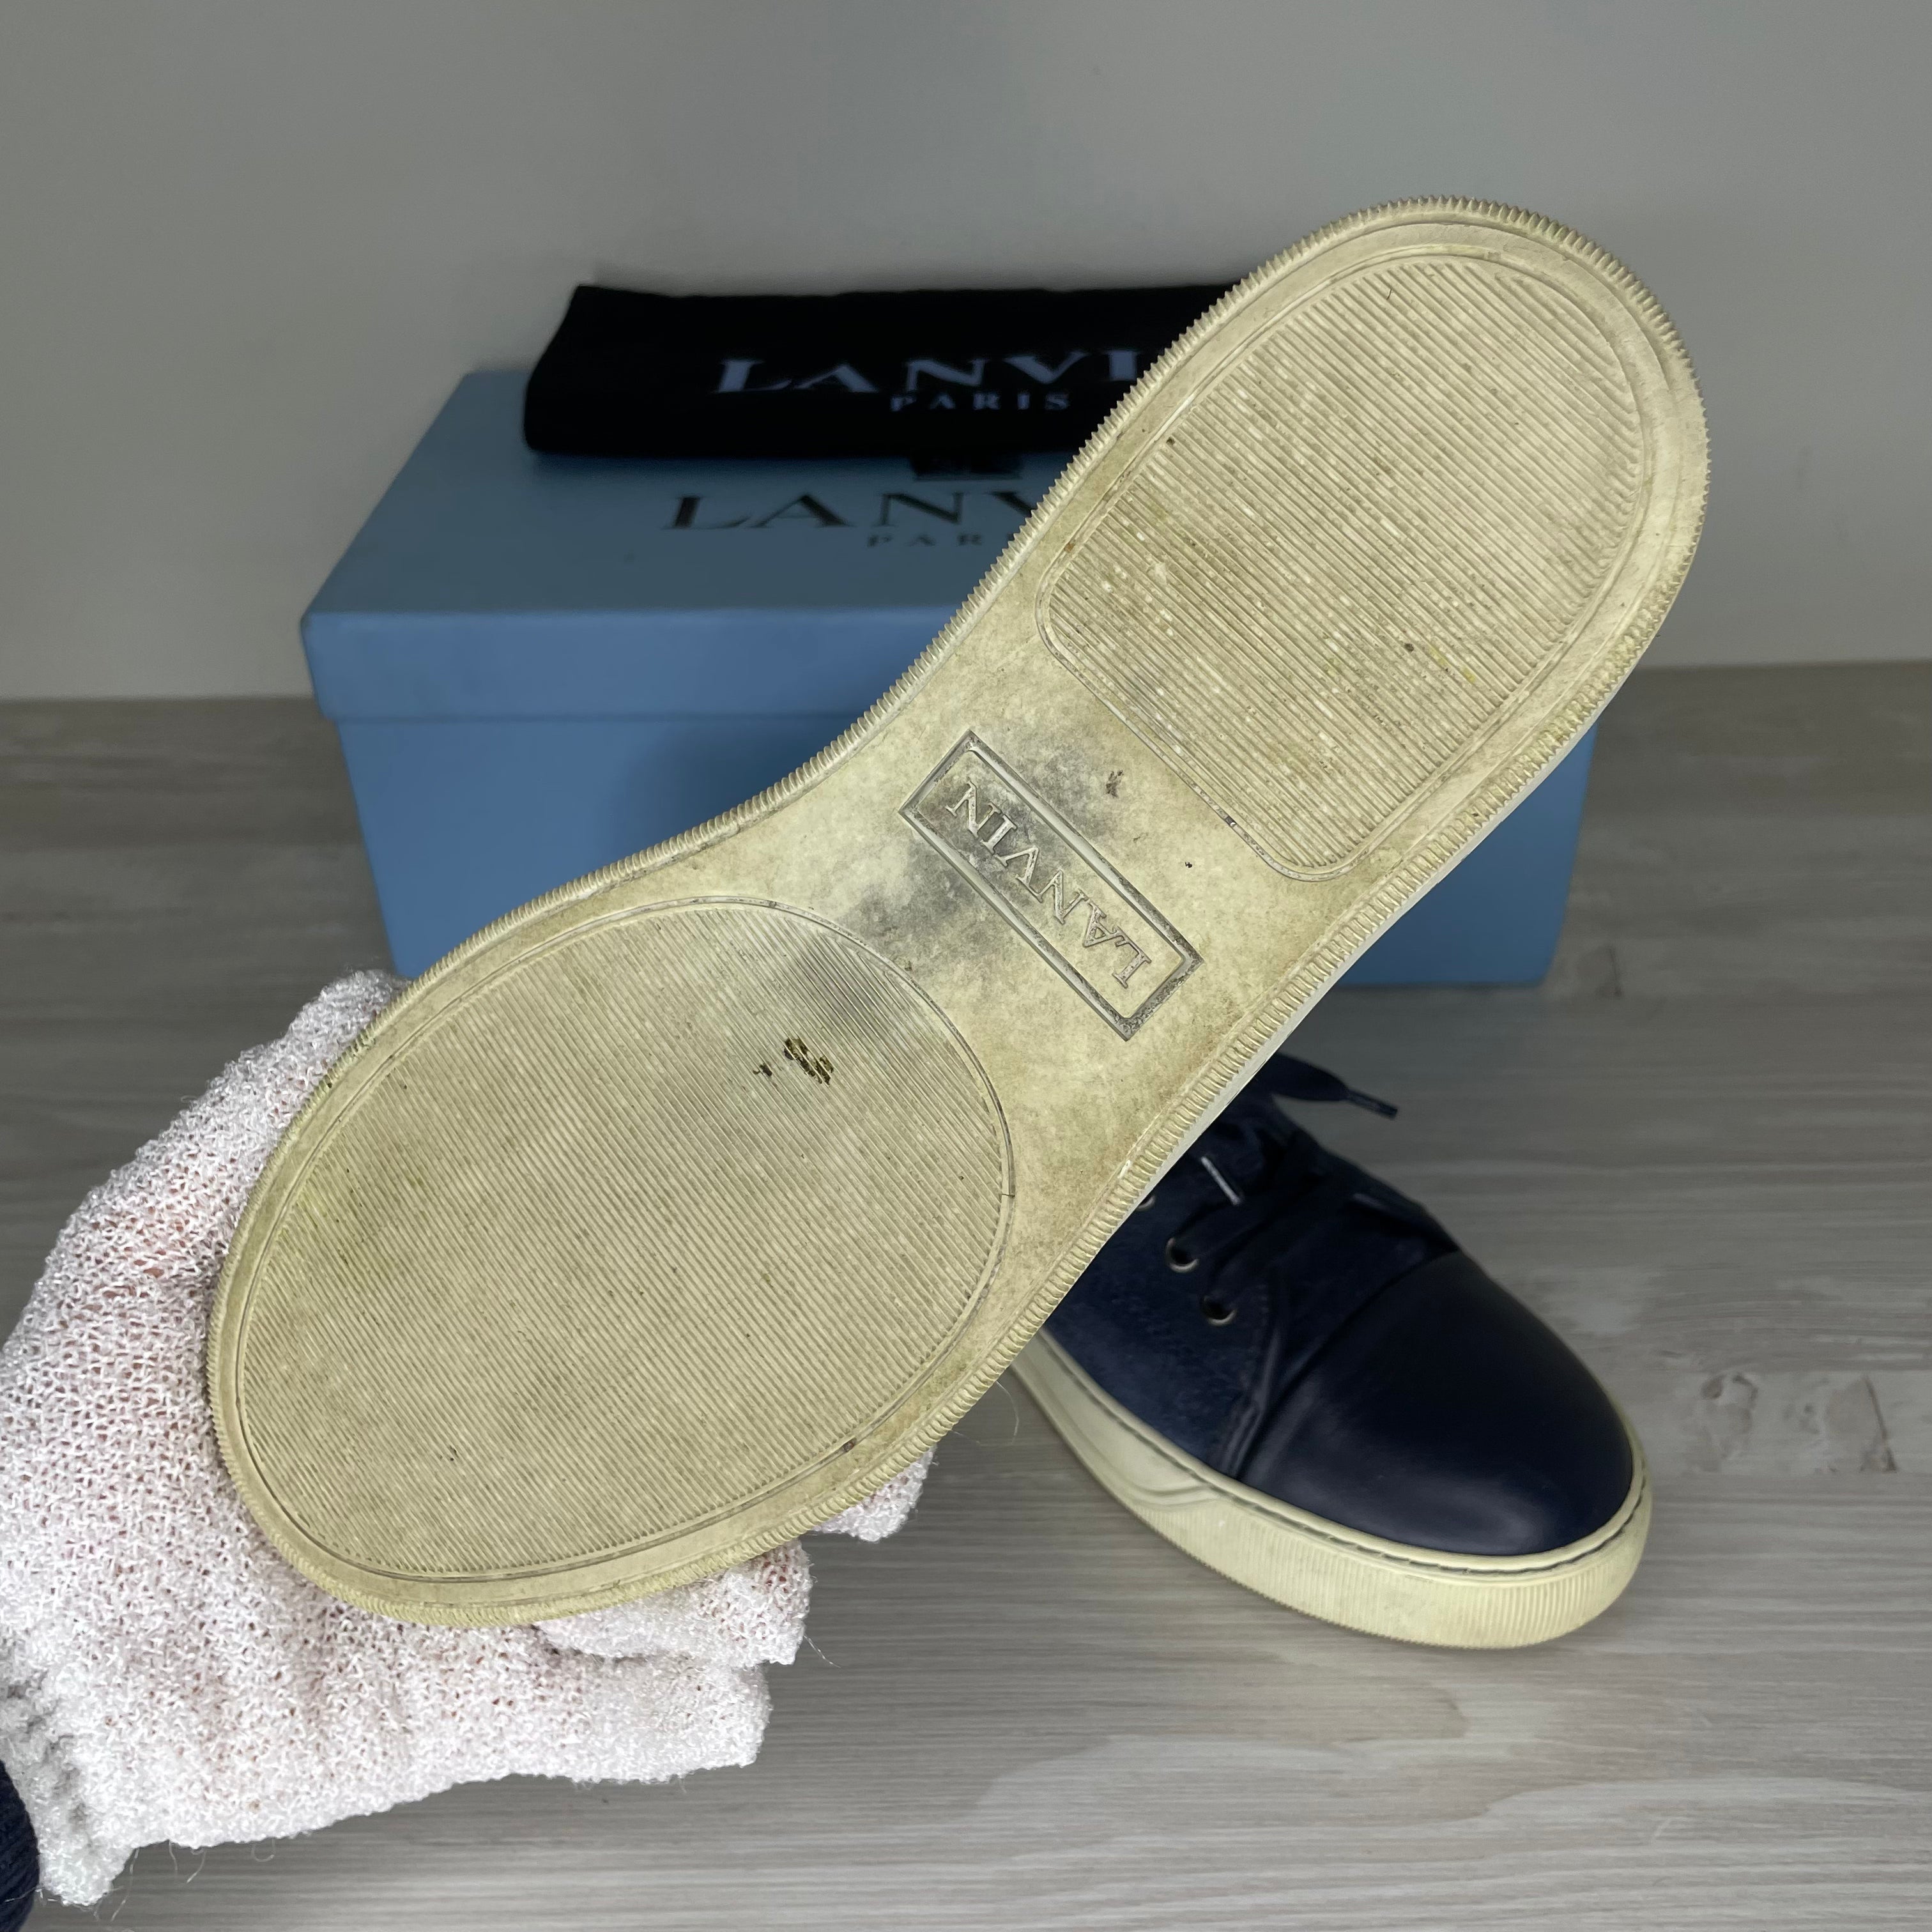 Lanvin Sneakers, Dark Blue Suede 'Mat Toe' (40)